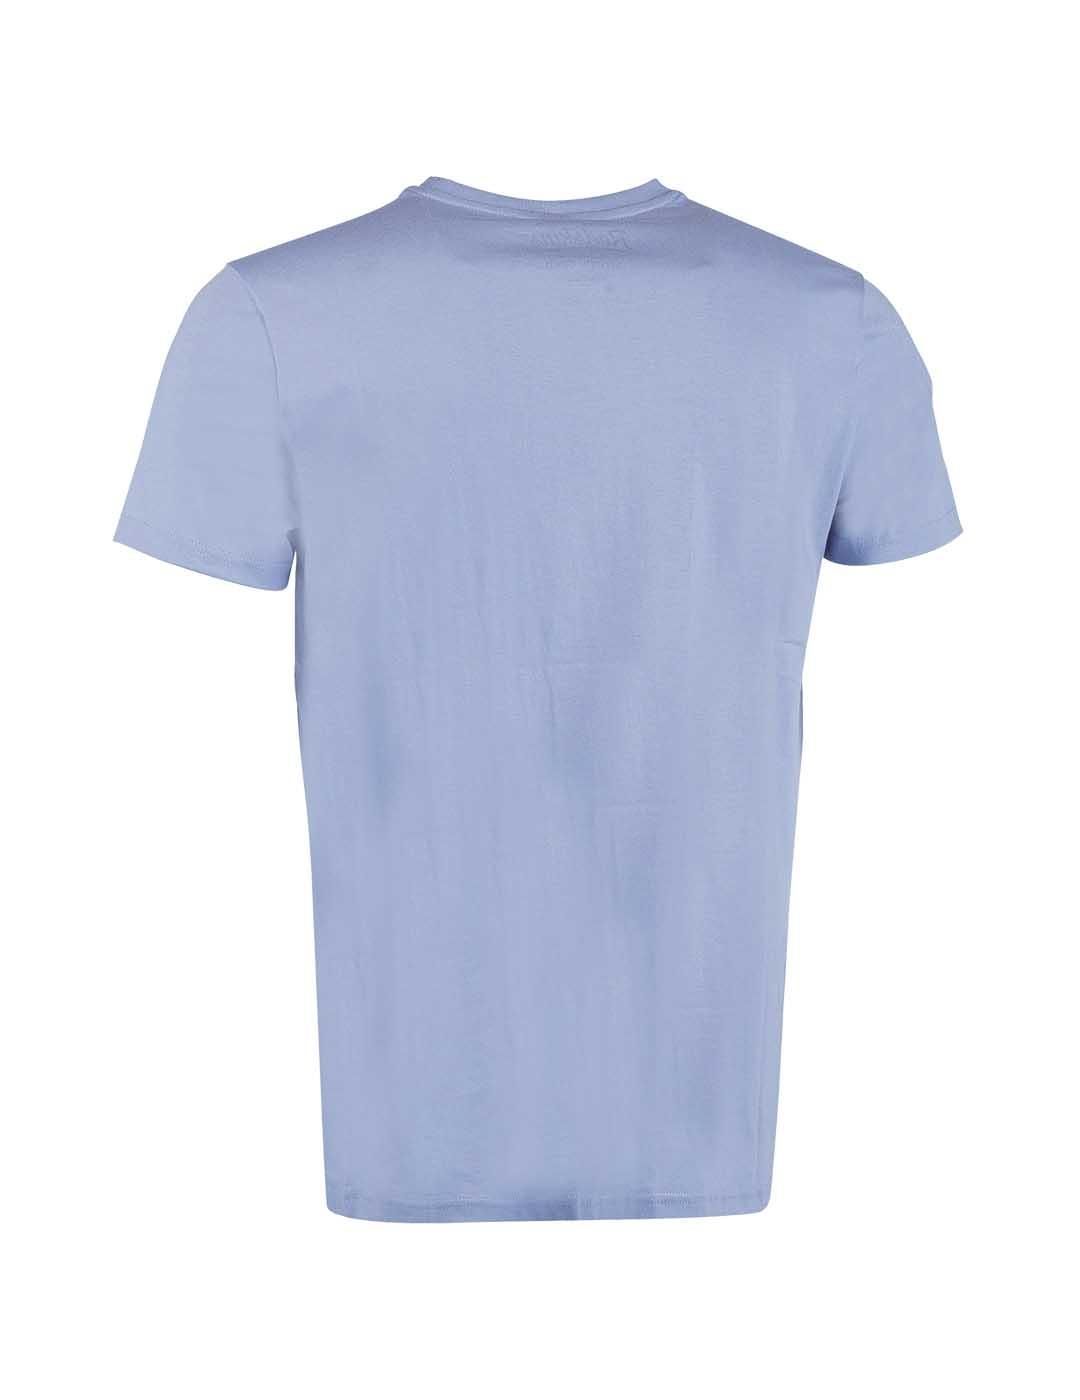 Camiseta Redskins Bumper Easy Azul - Bicos de Fío